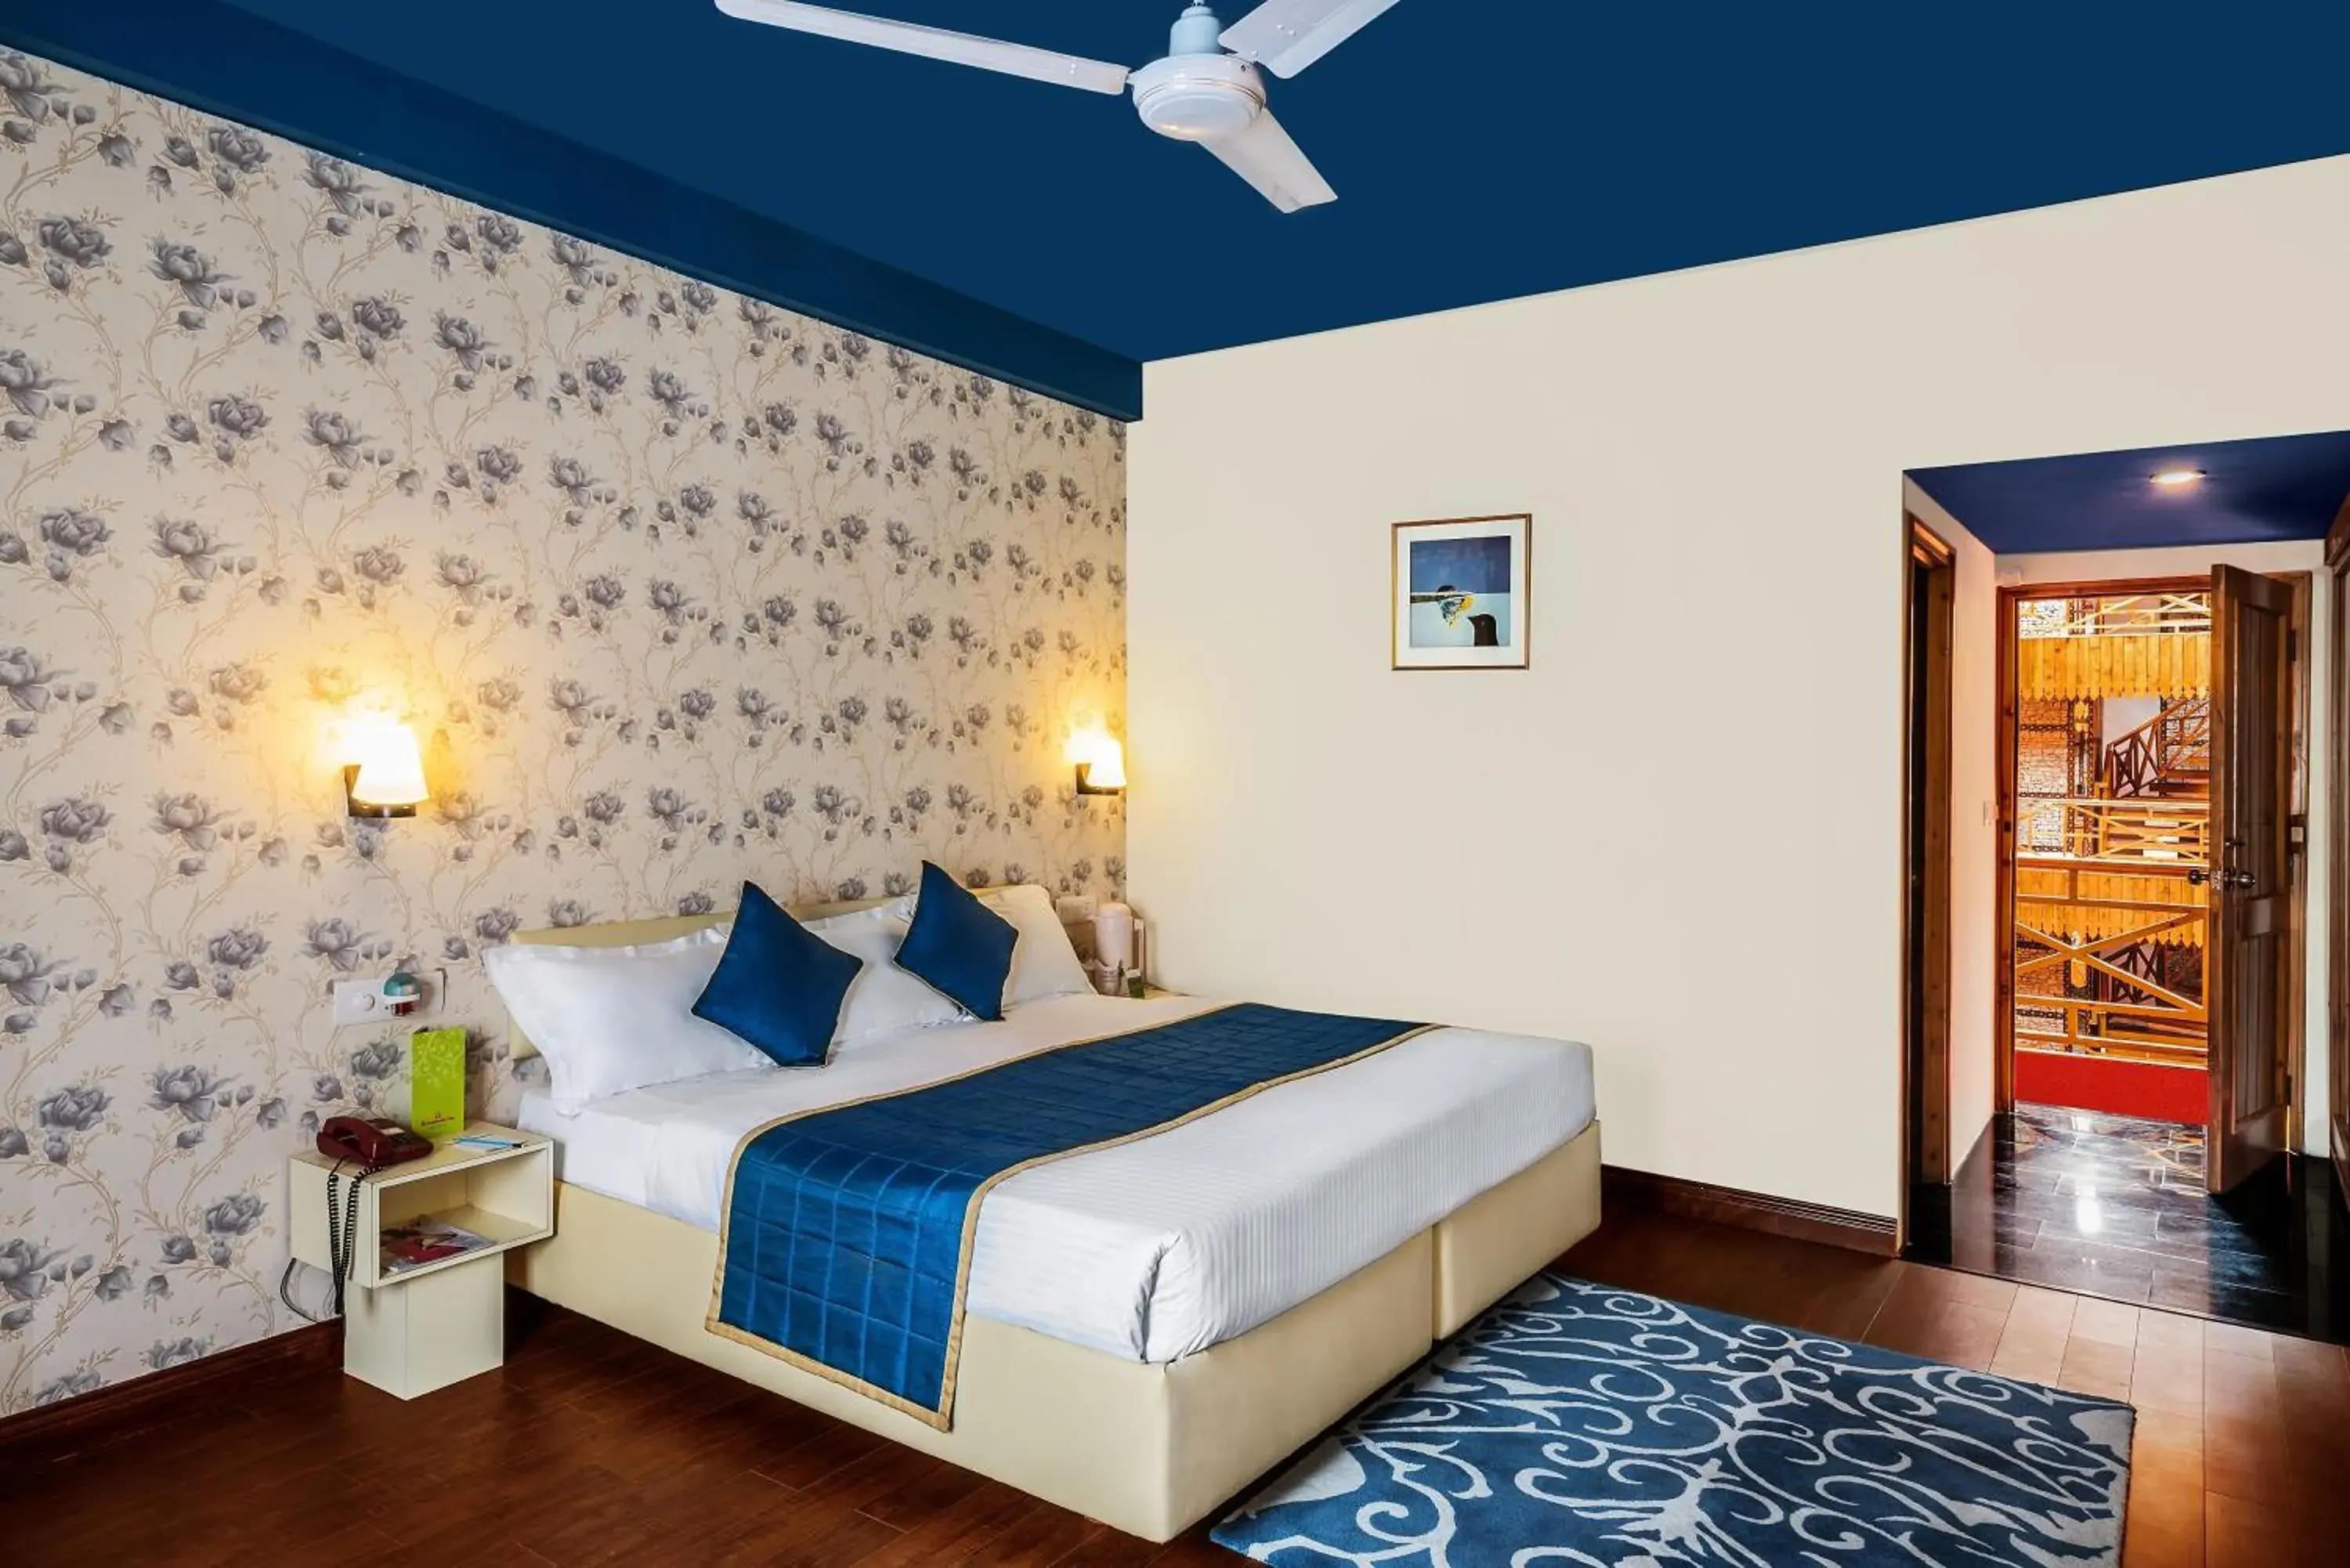 Bed, Room Photo in Honeymoon Inn - Manali